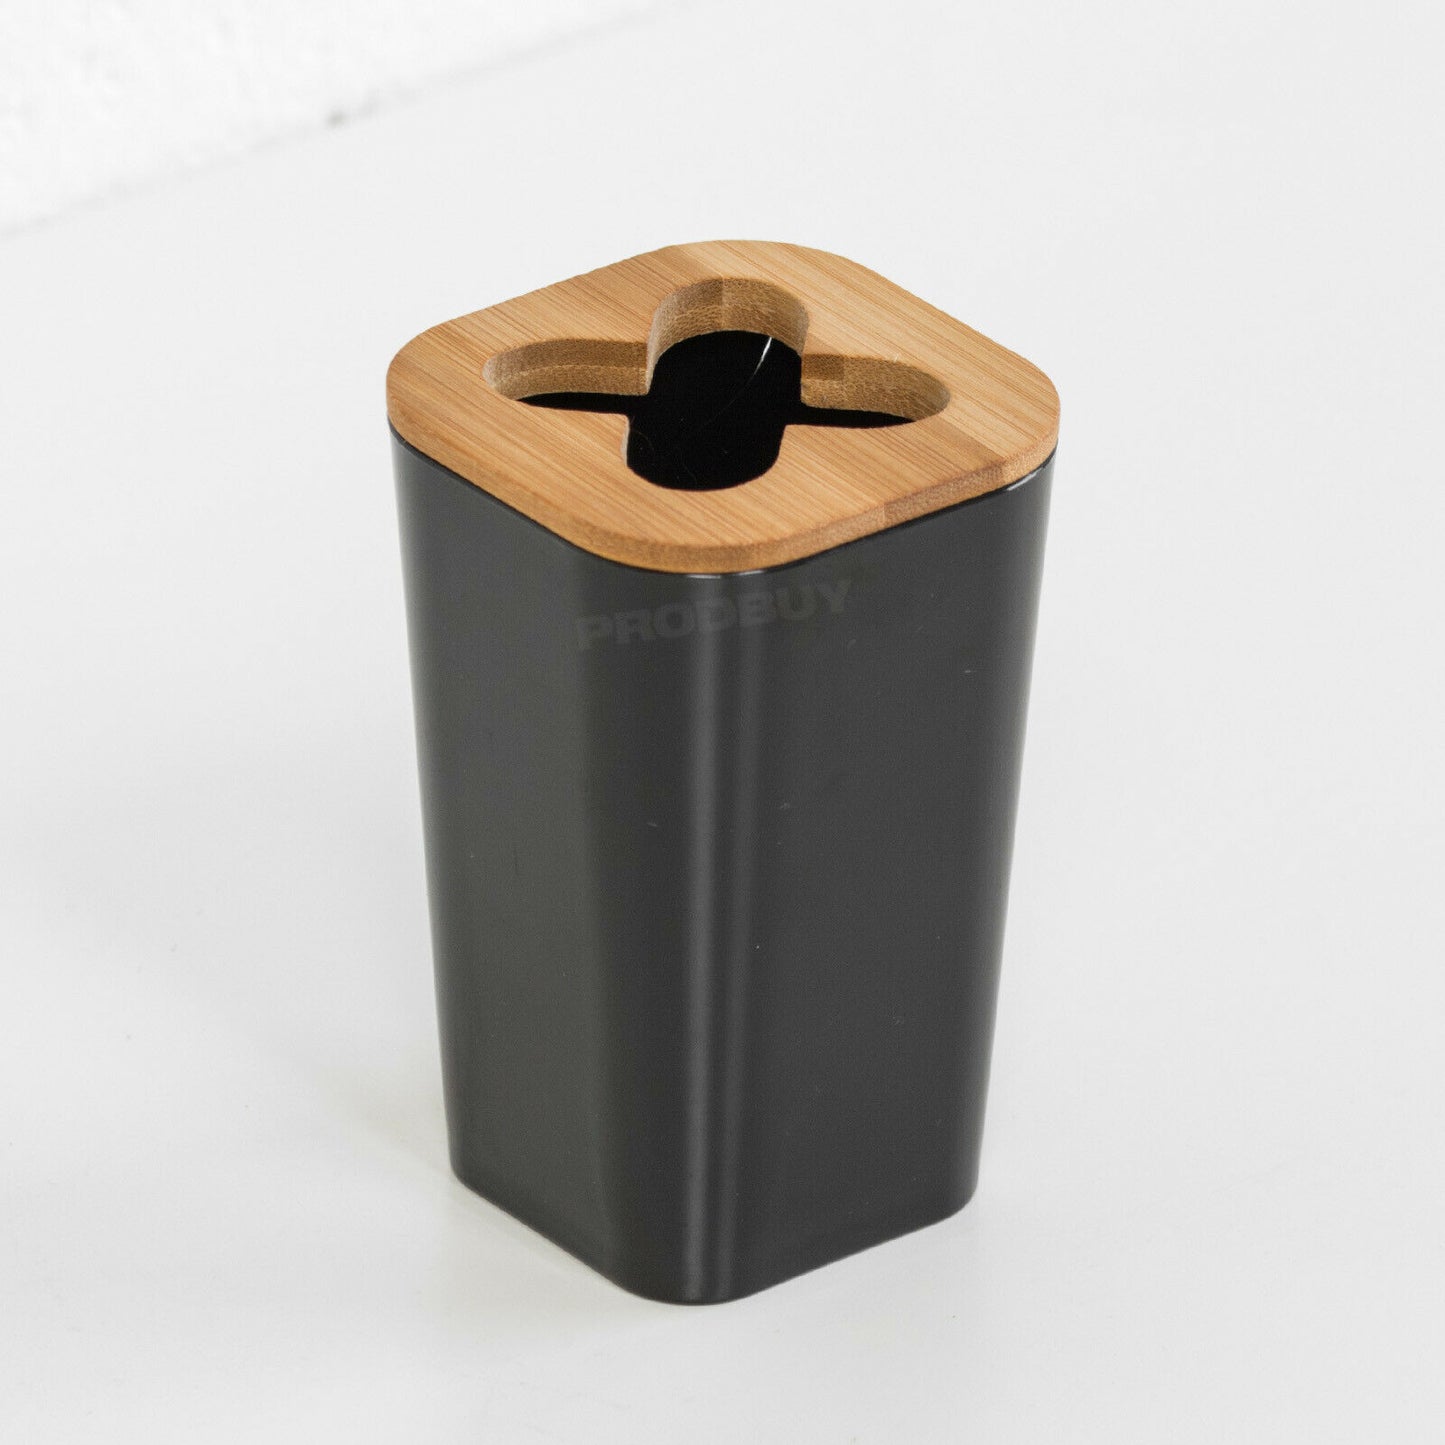 4 Piece Bathroom Accessories Set - Black Plastic with Bamboo Trim